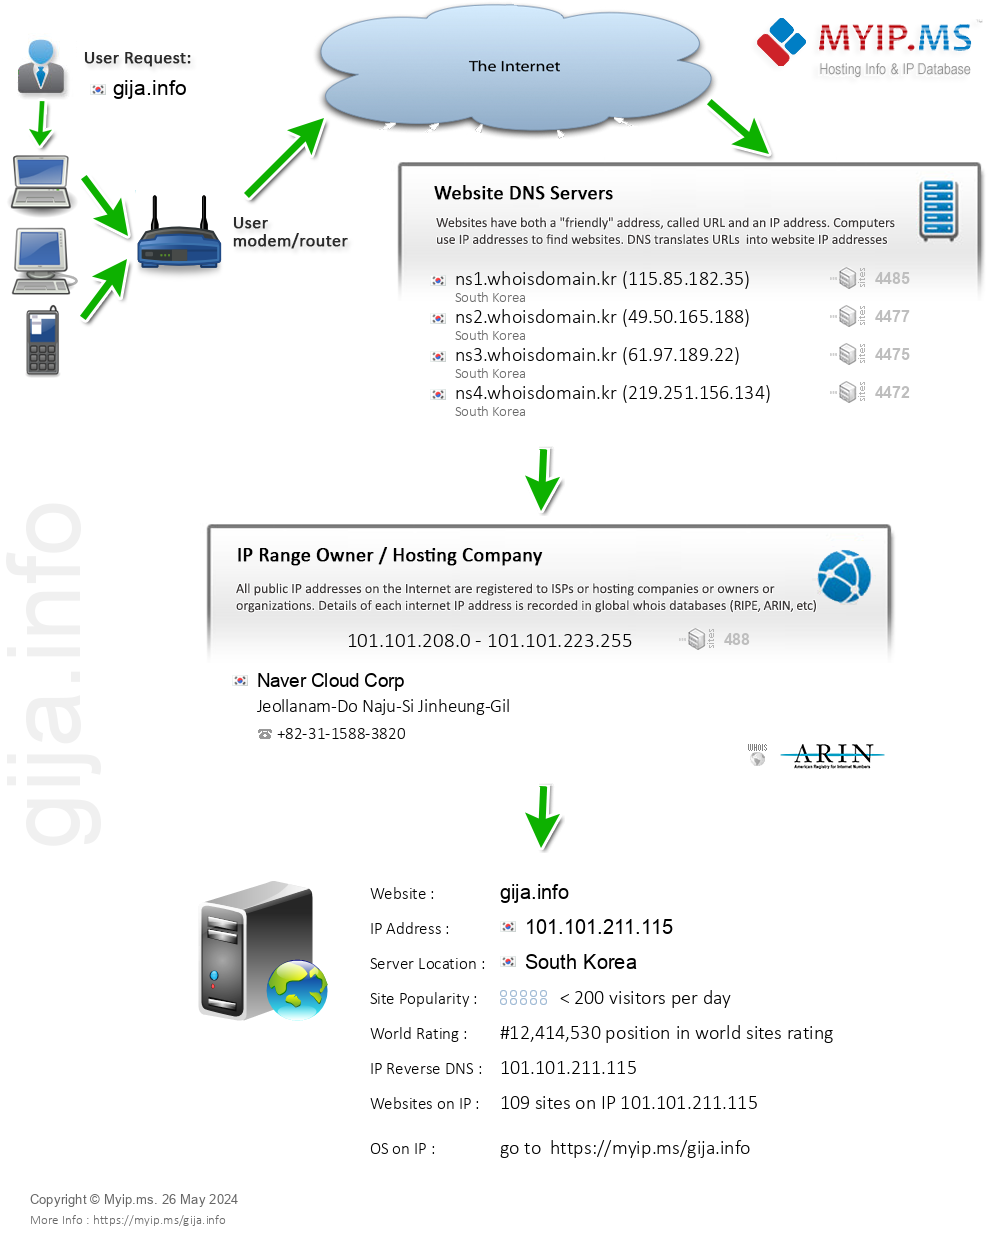 Gija.info - Website Hosting Visual IP Diagram